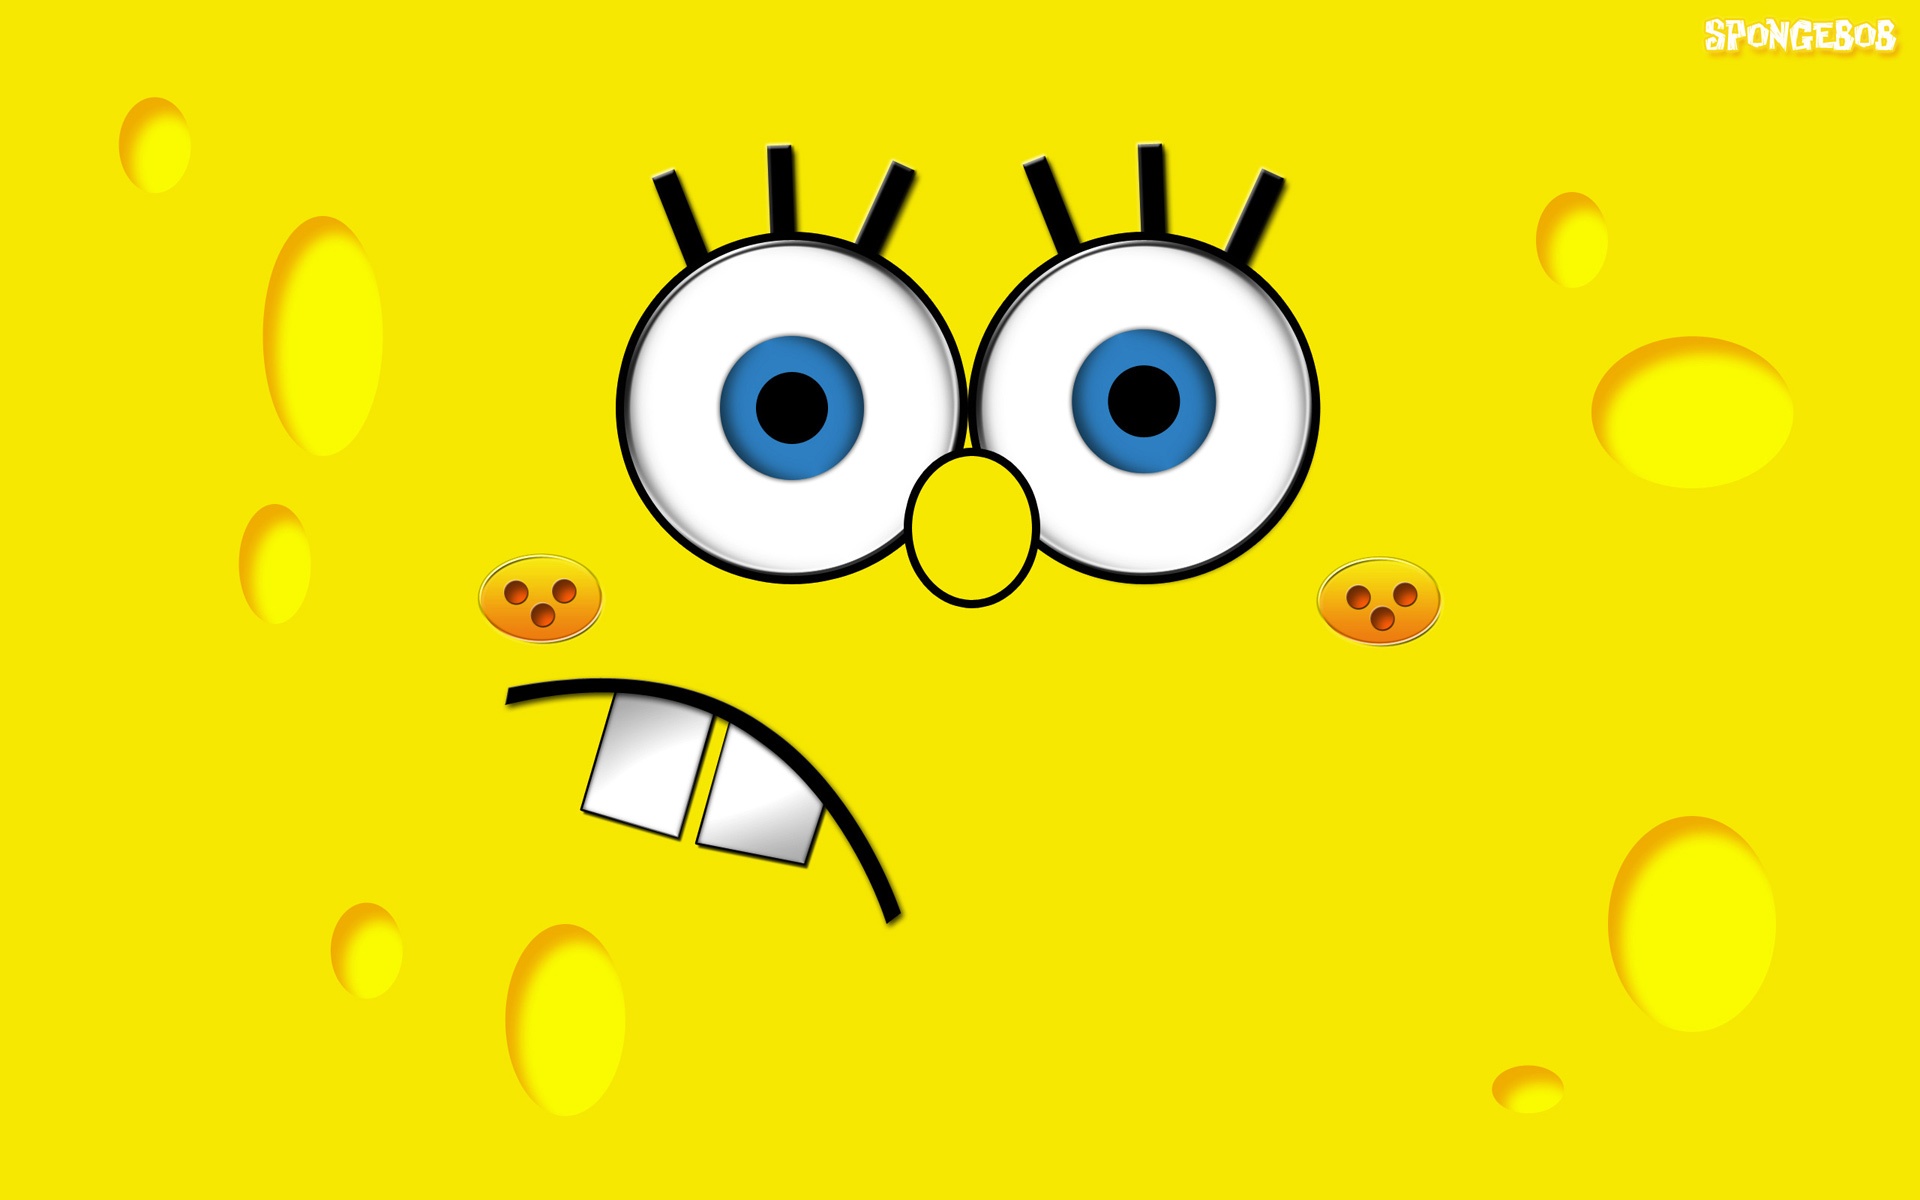 Download this Spongebob Squarepants picture